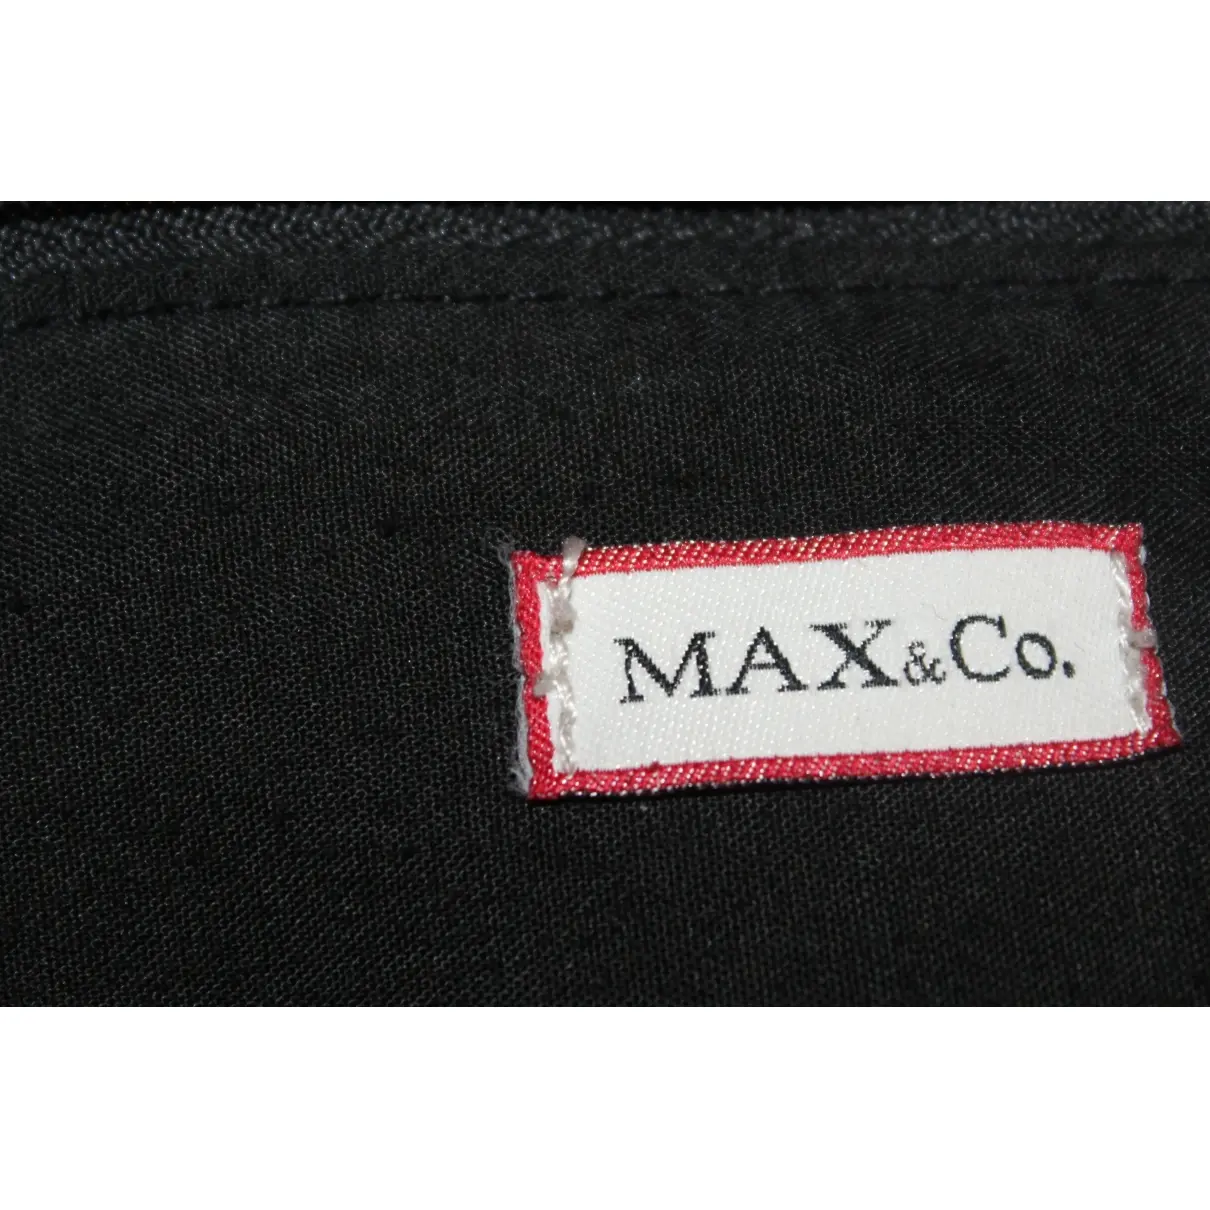 Buy Max & Co Handbag online